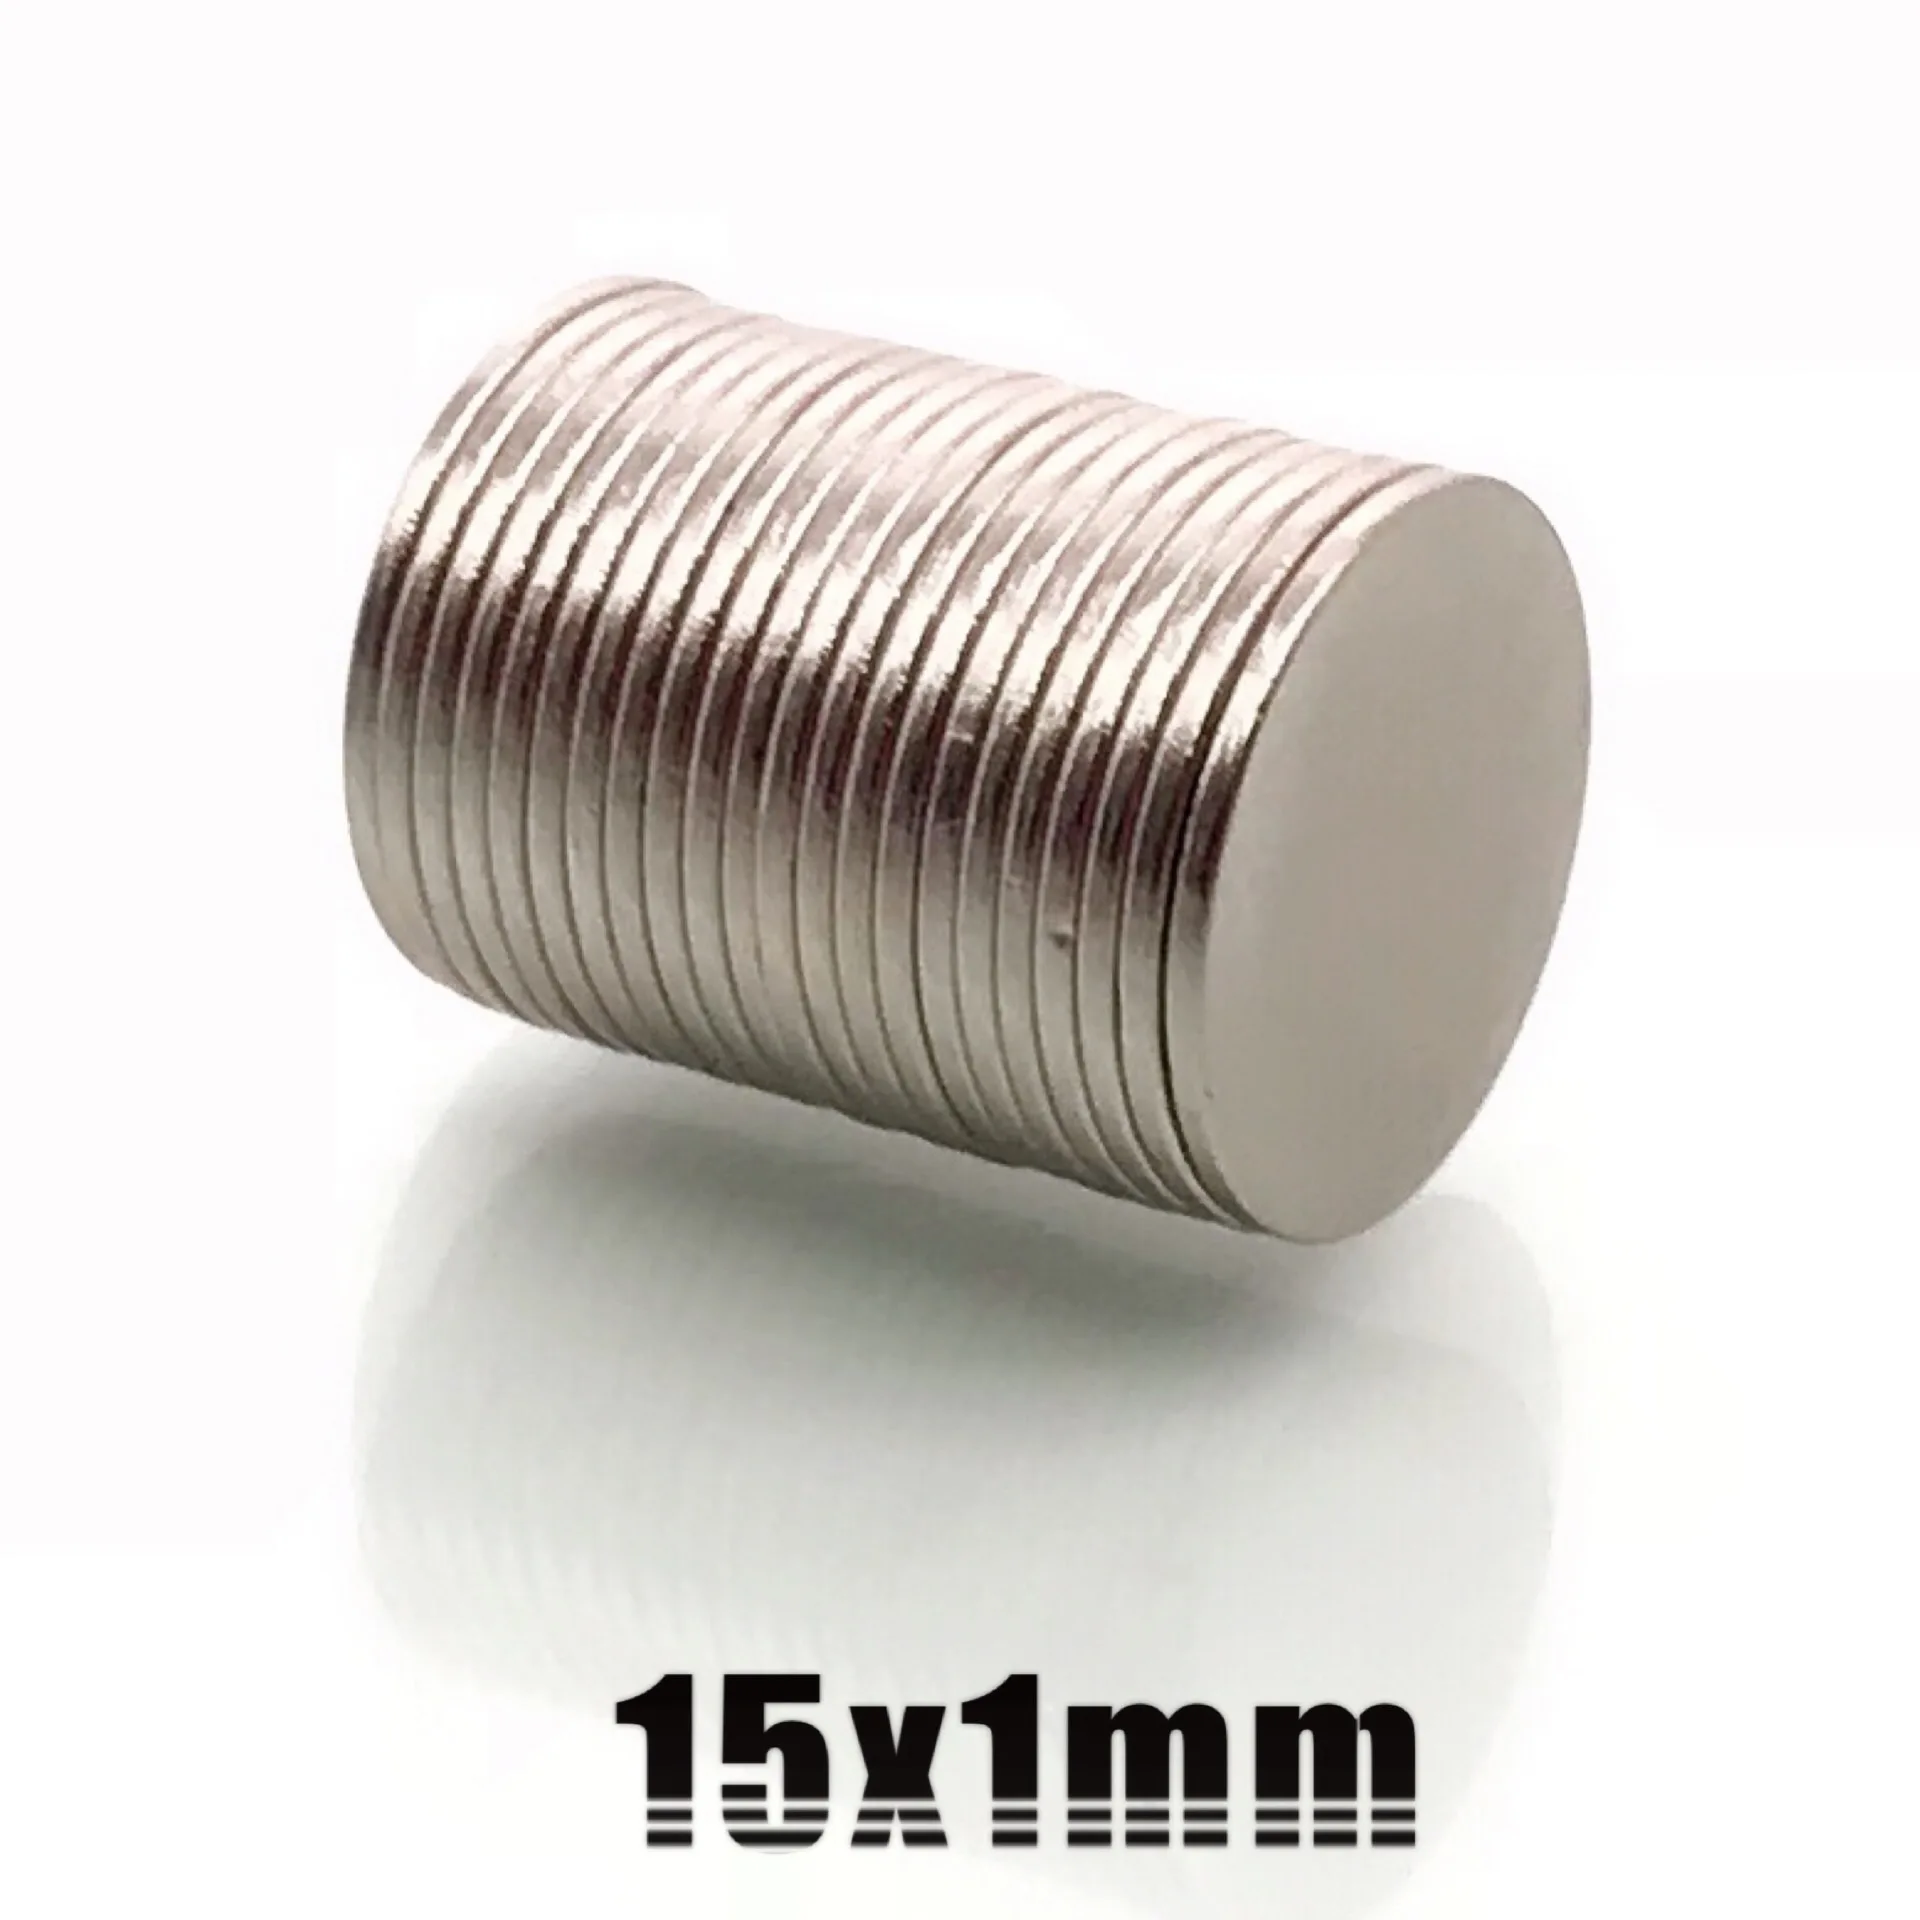 Super Strong Neodymium Round Disc Magnet Rare Earth Neodymium N50 12mm X 1mm Lot 